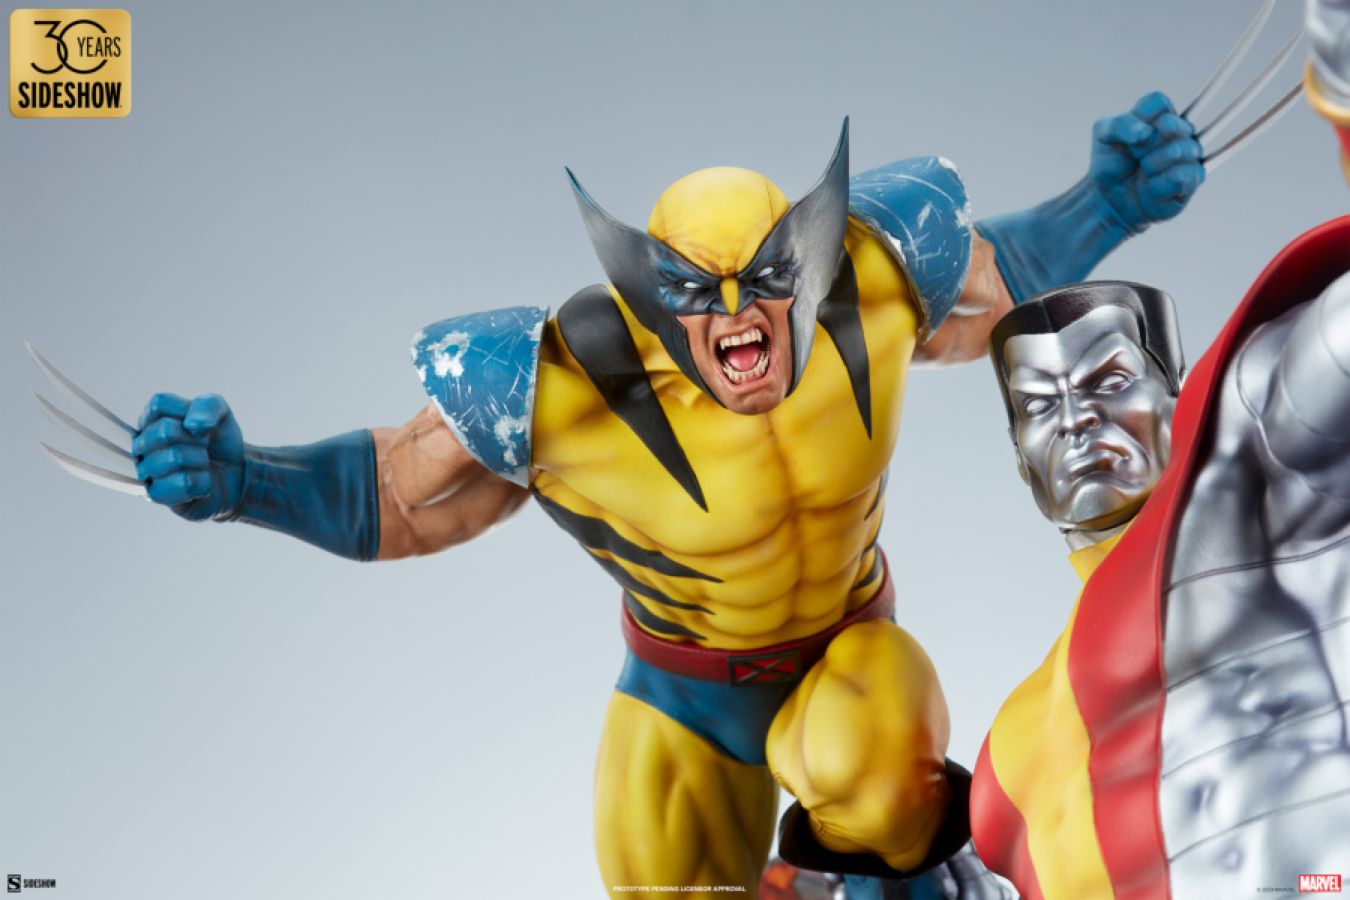 X-Men - Colossus & Wolverine Statue